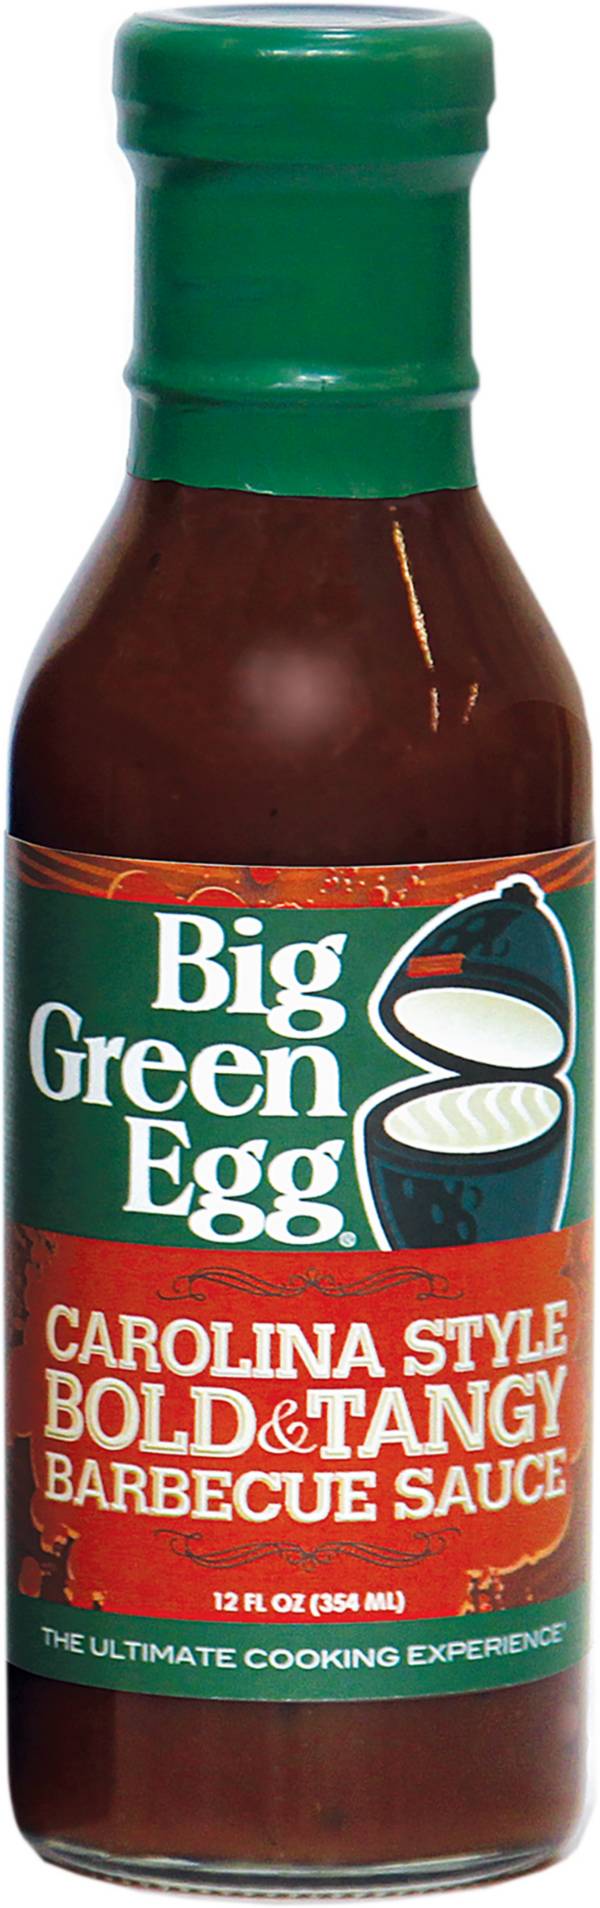 Big Green Egg Carolina Style Barbeque Sauce product image